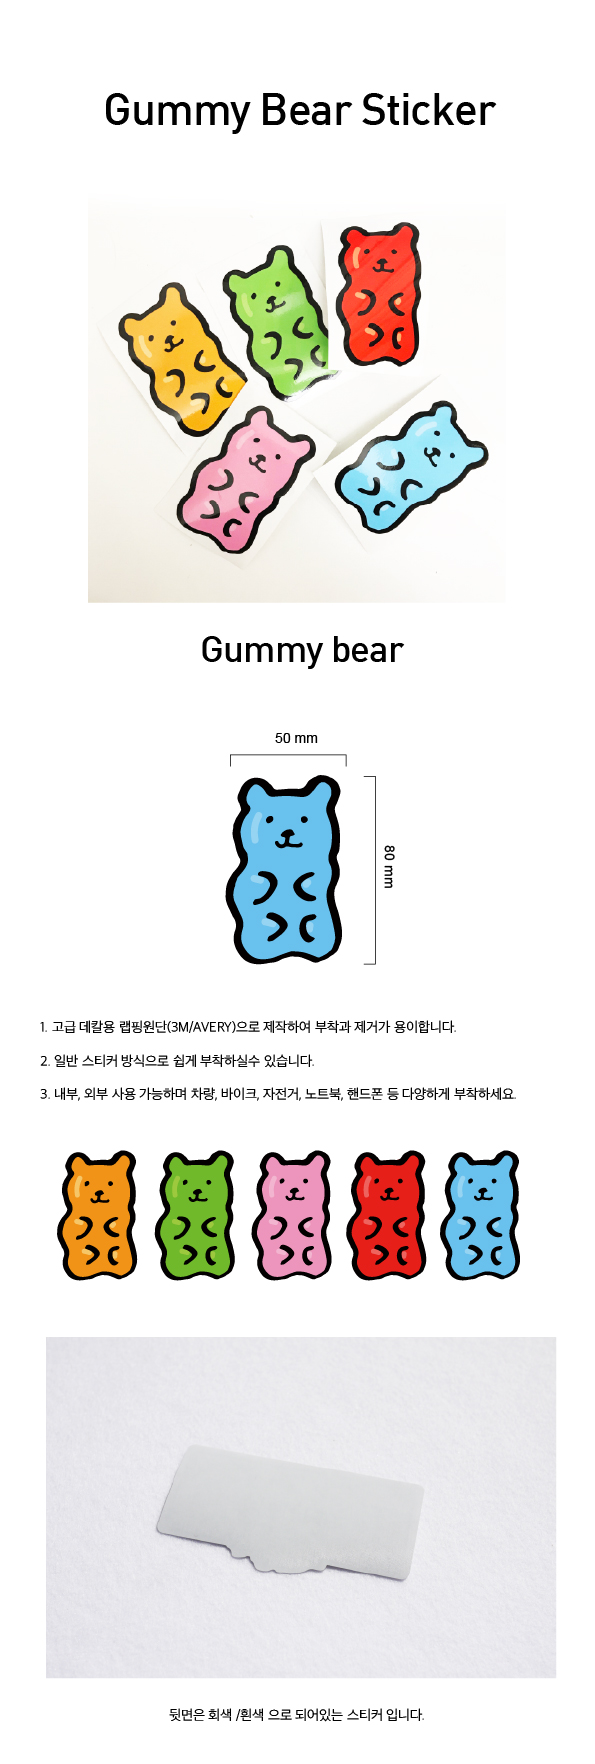 gummy-bear-sticker_03_003404_113632.jpg